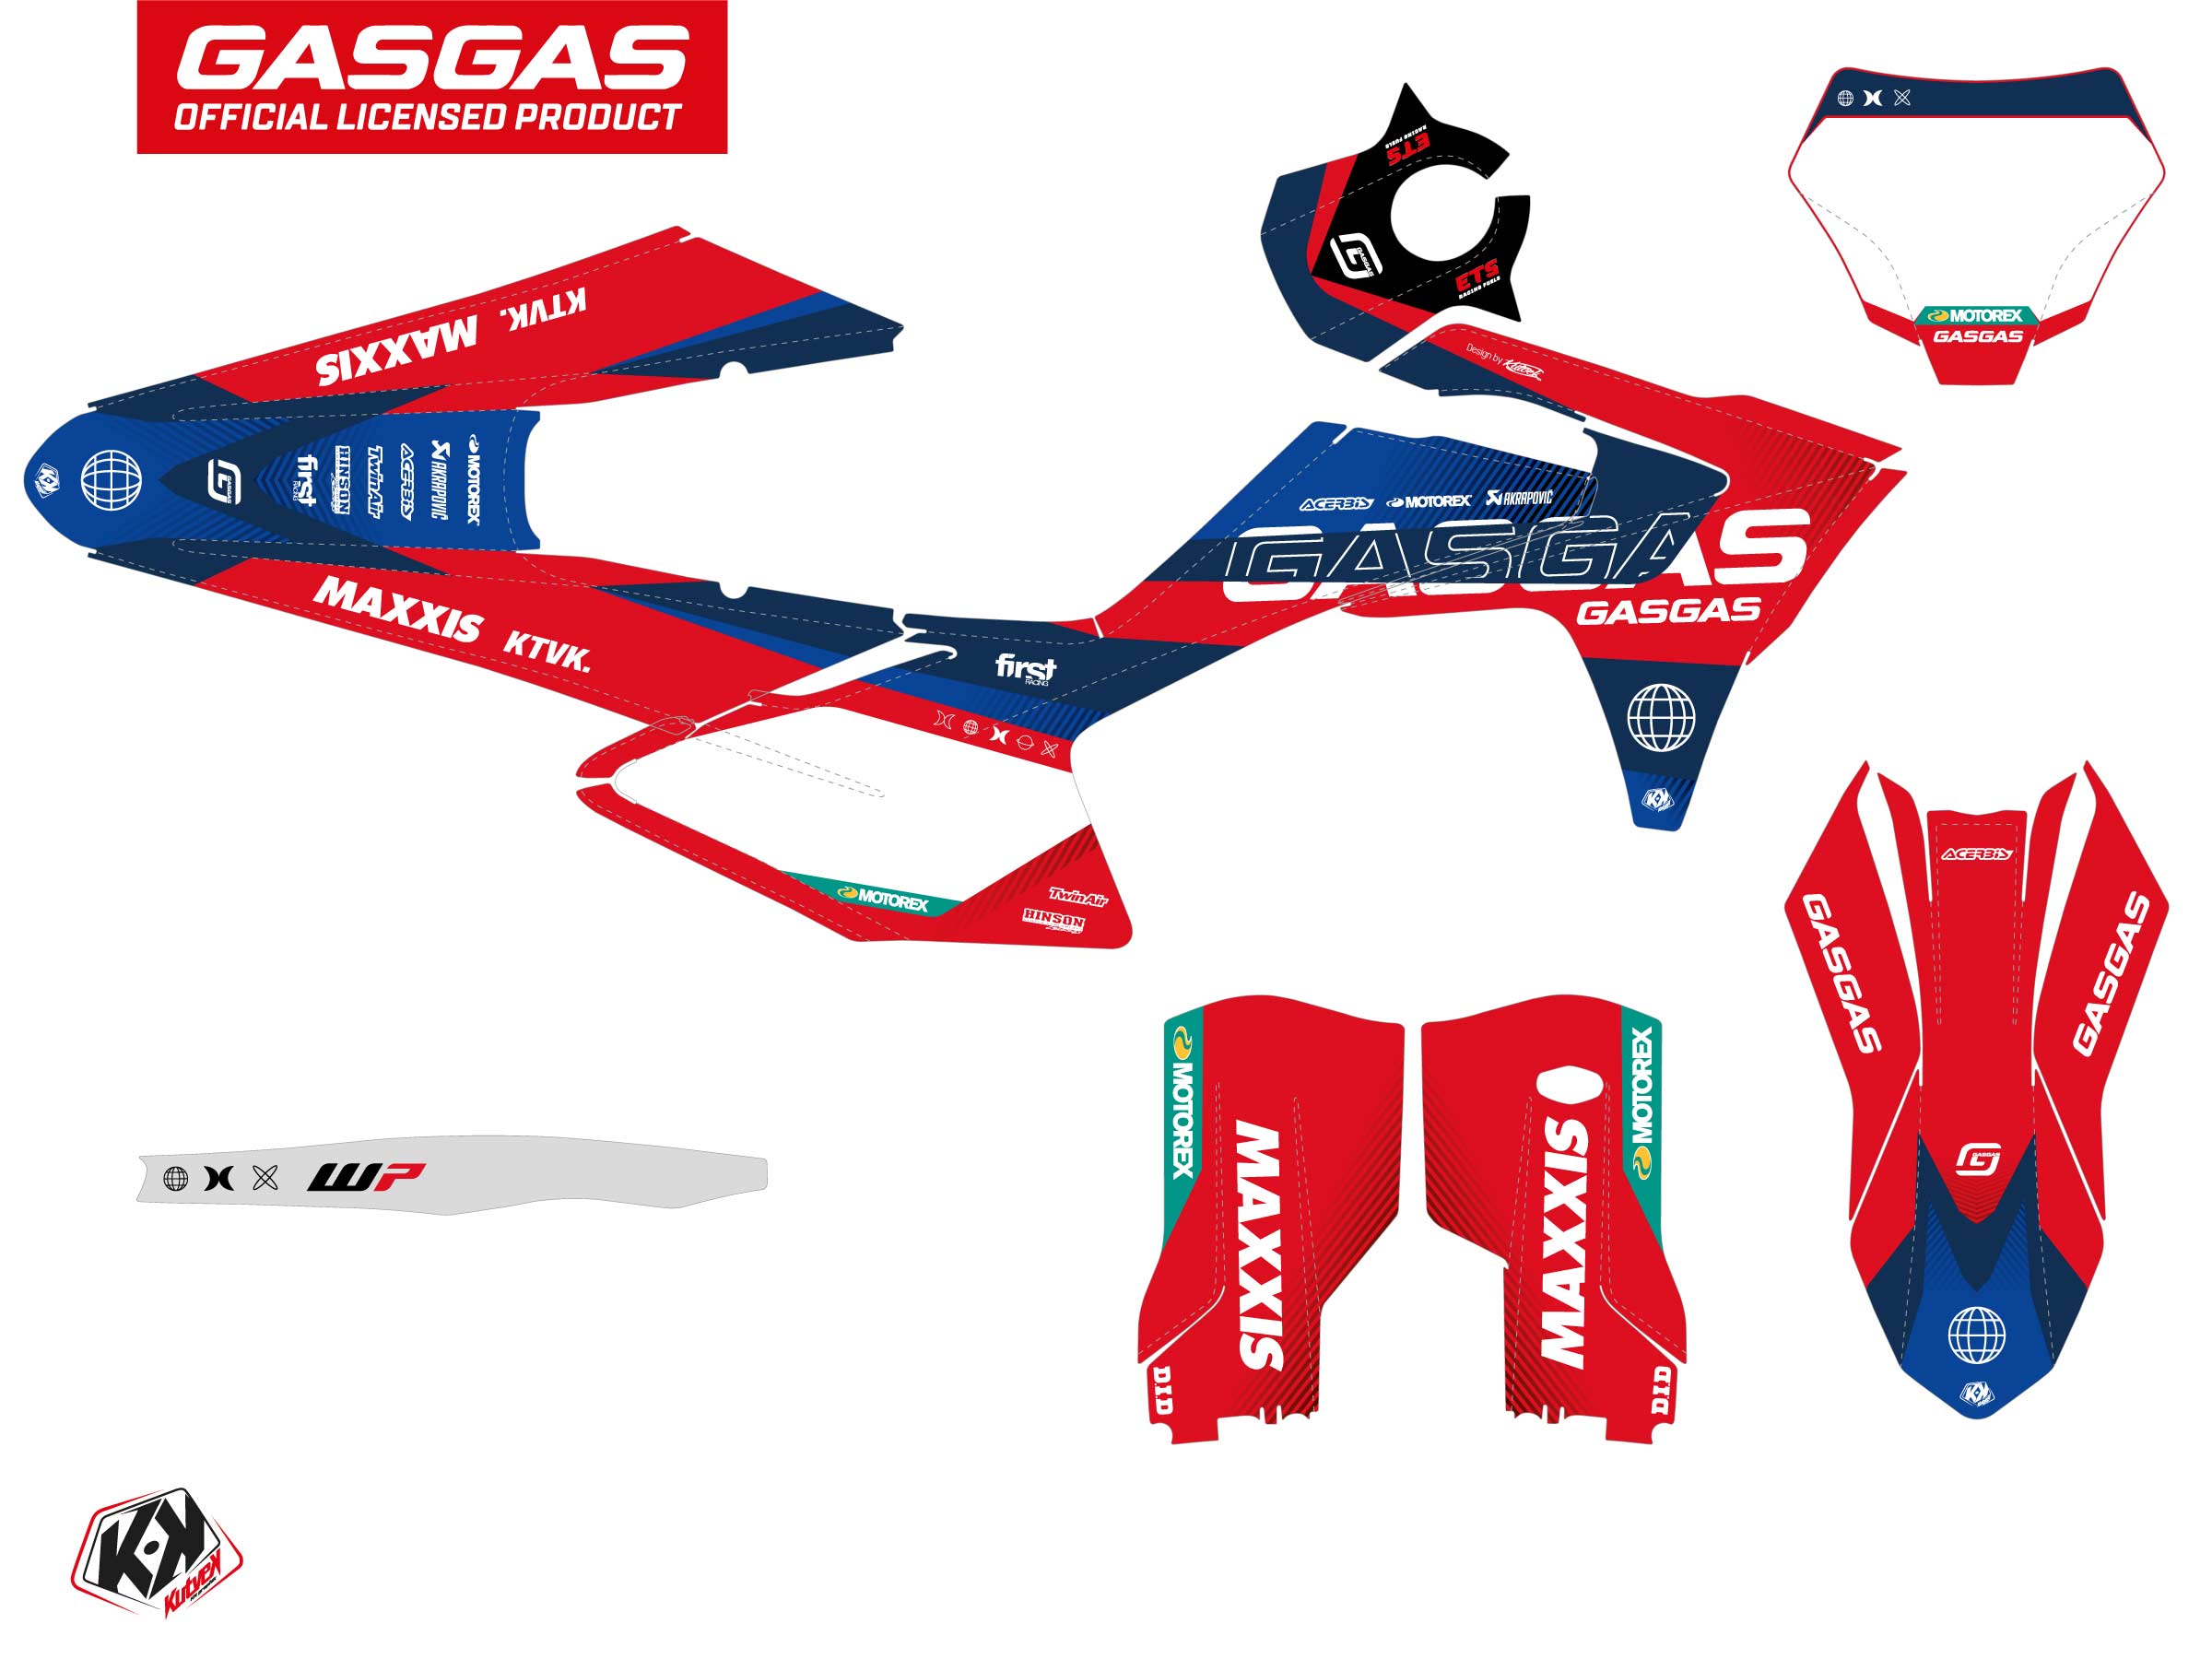 Kit Déco Motocross Kanyon Gasgas Ex 350 F Rouge